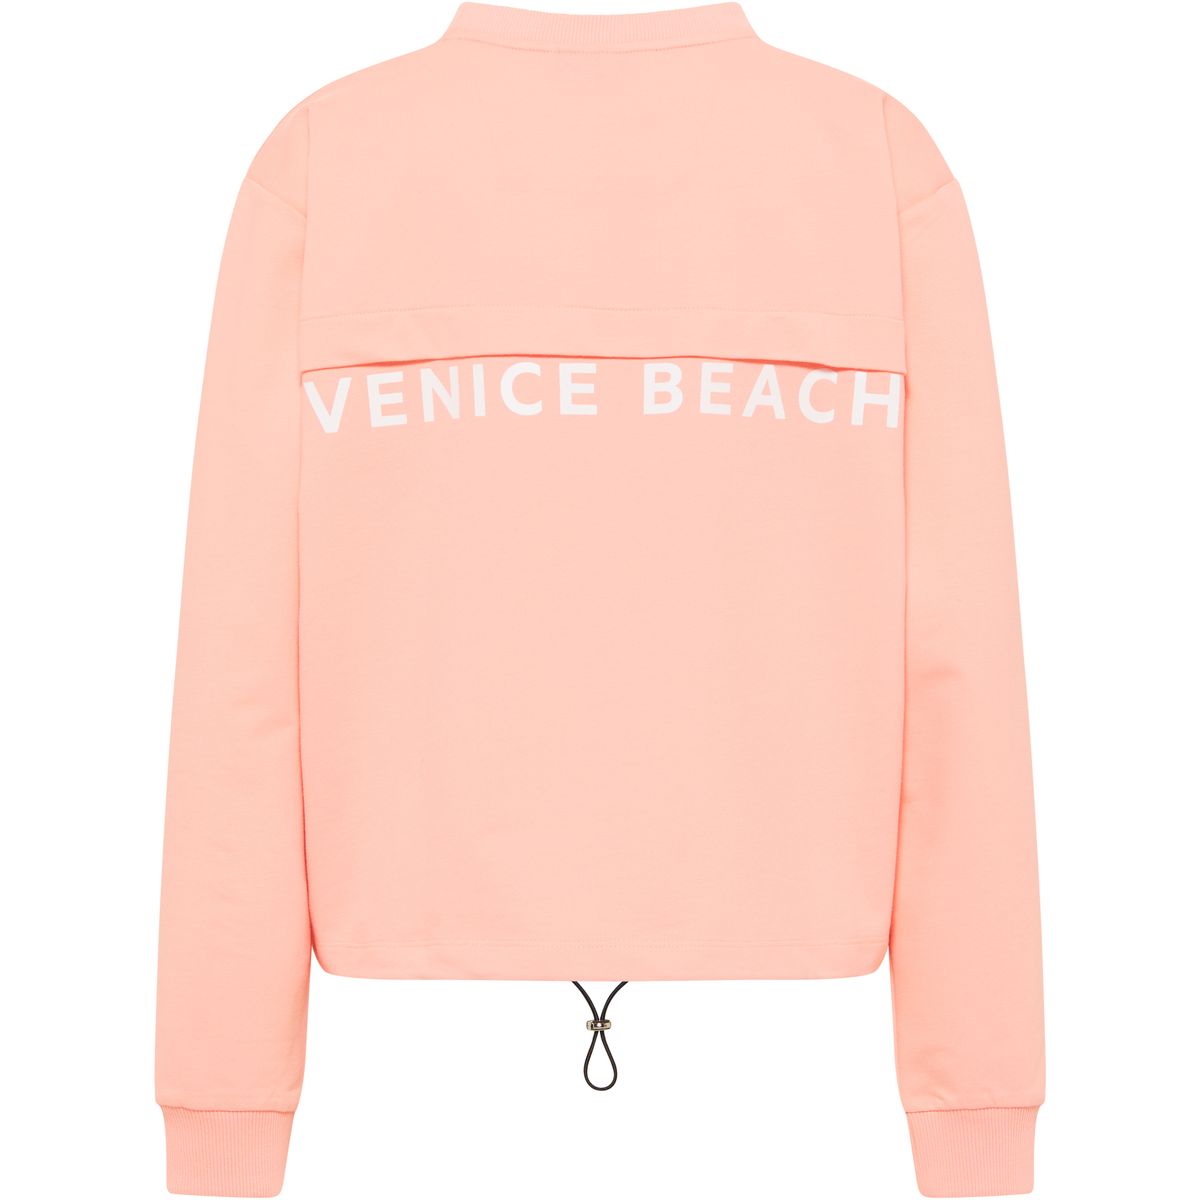 Venice Beach Tollow Damen Sweatshirt_1